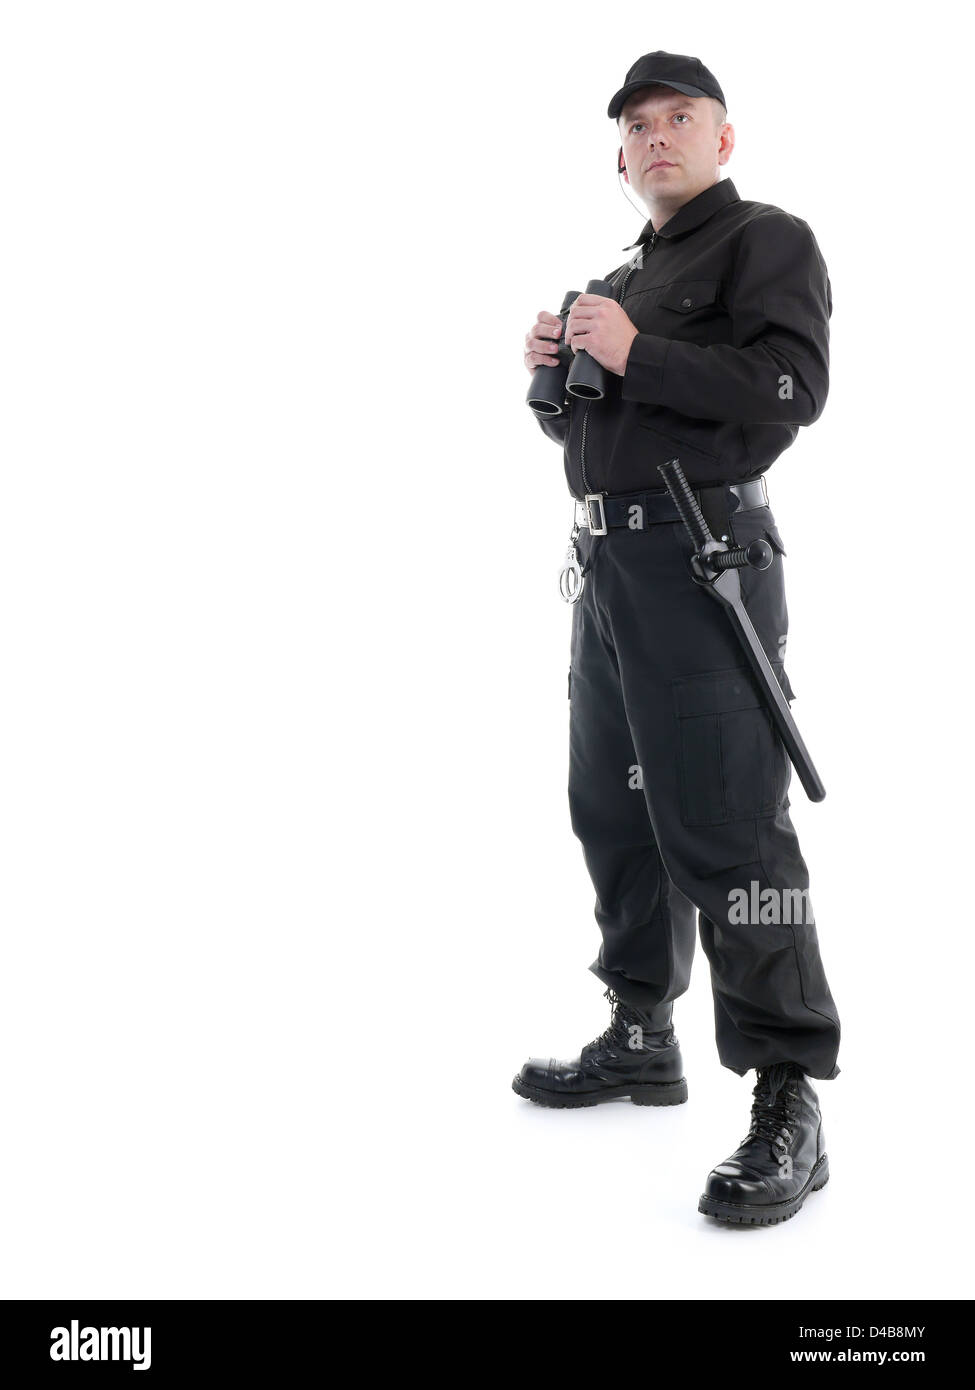 Security man wearing black uniform standing with binoculars, shot on white Stock Photo